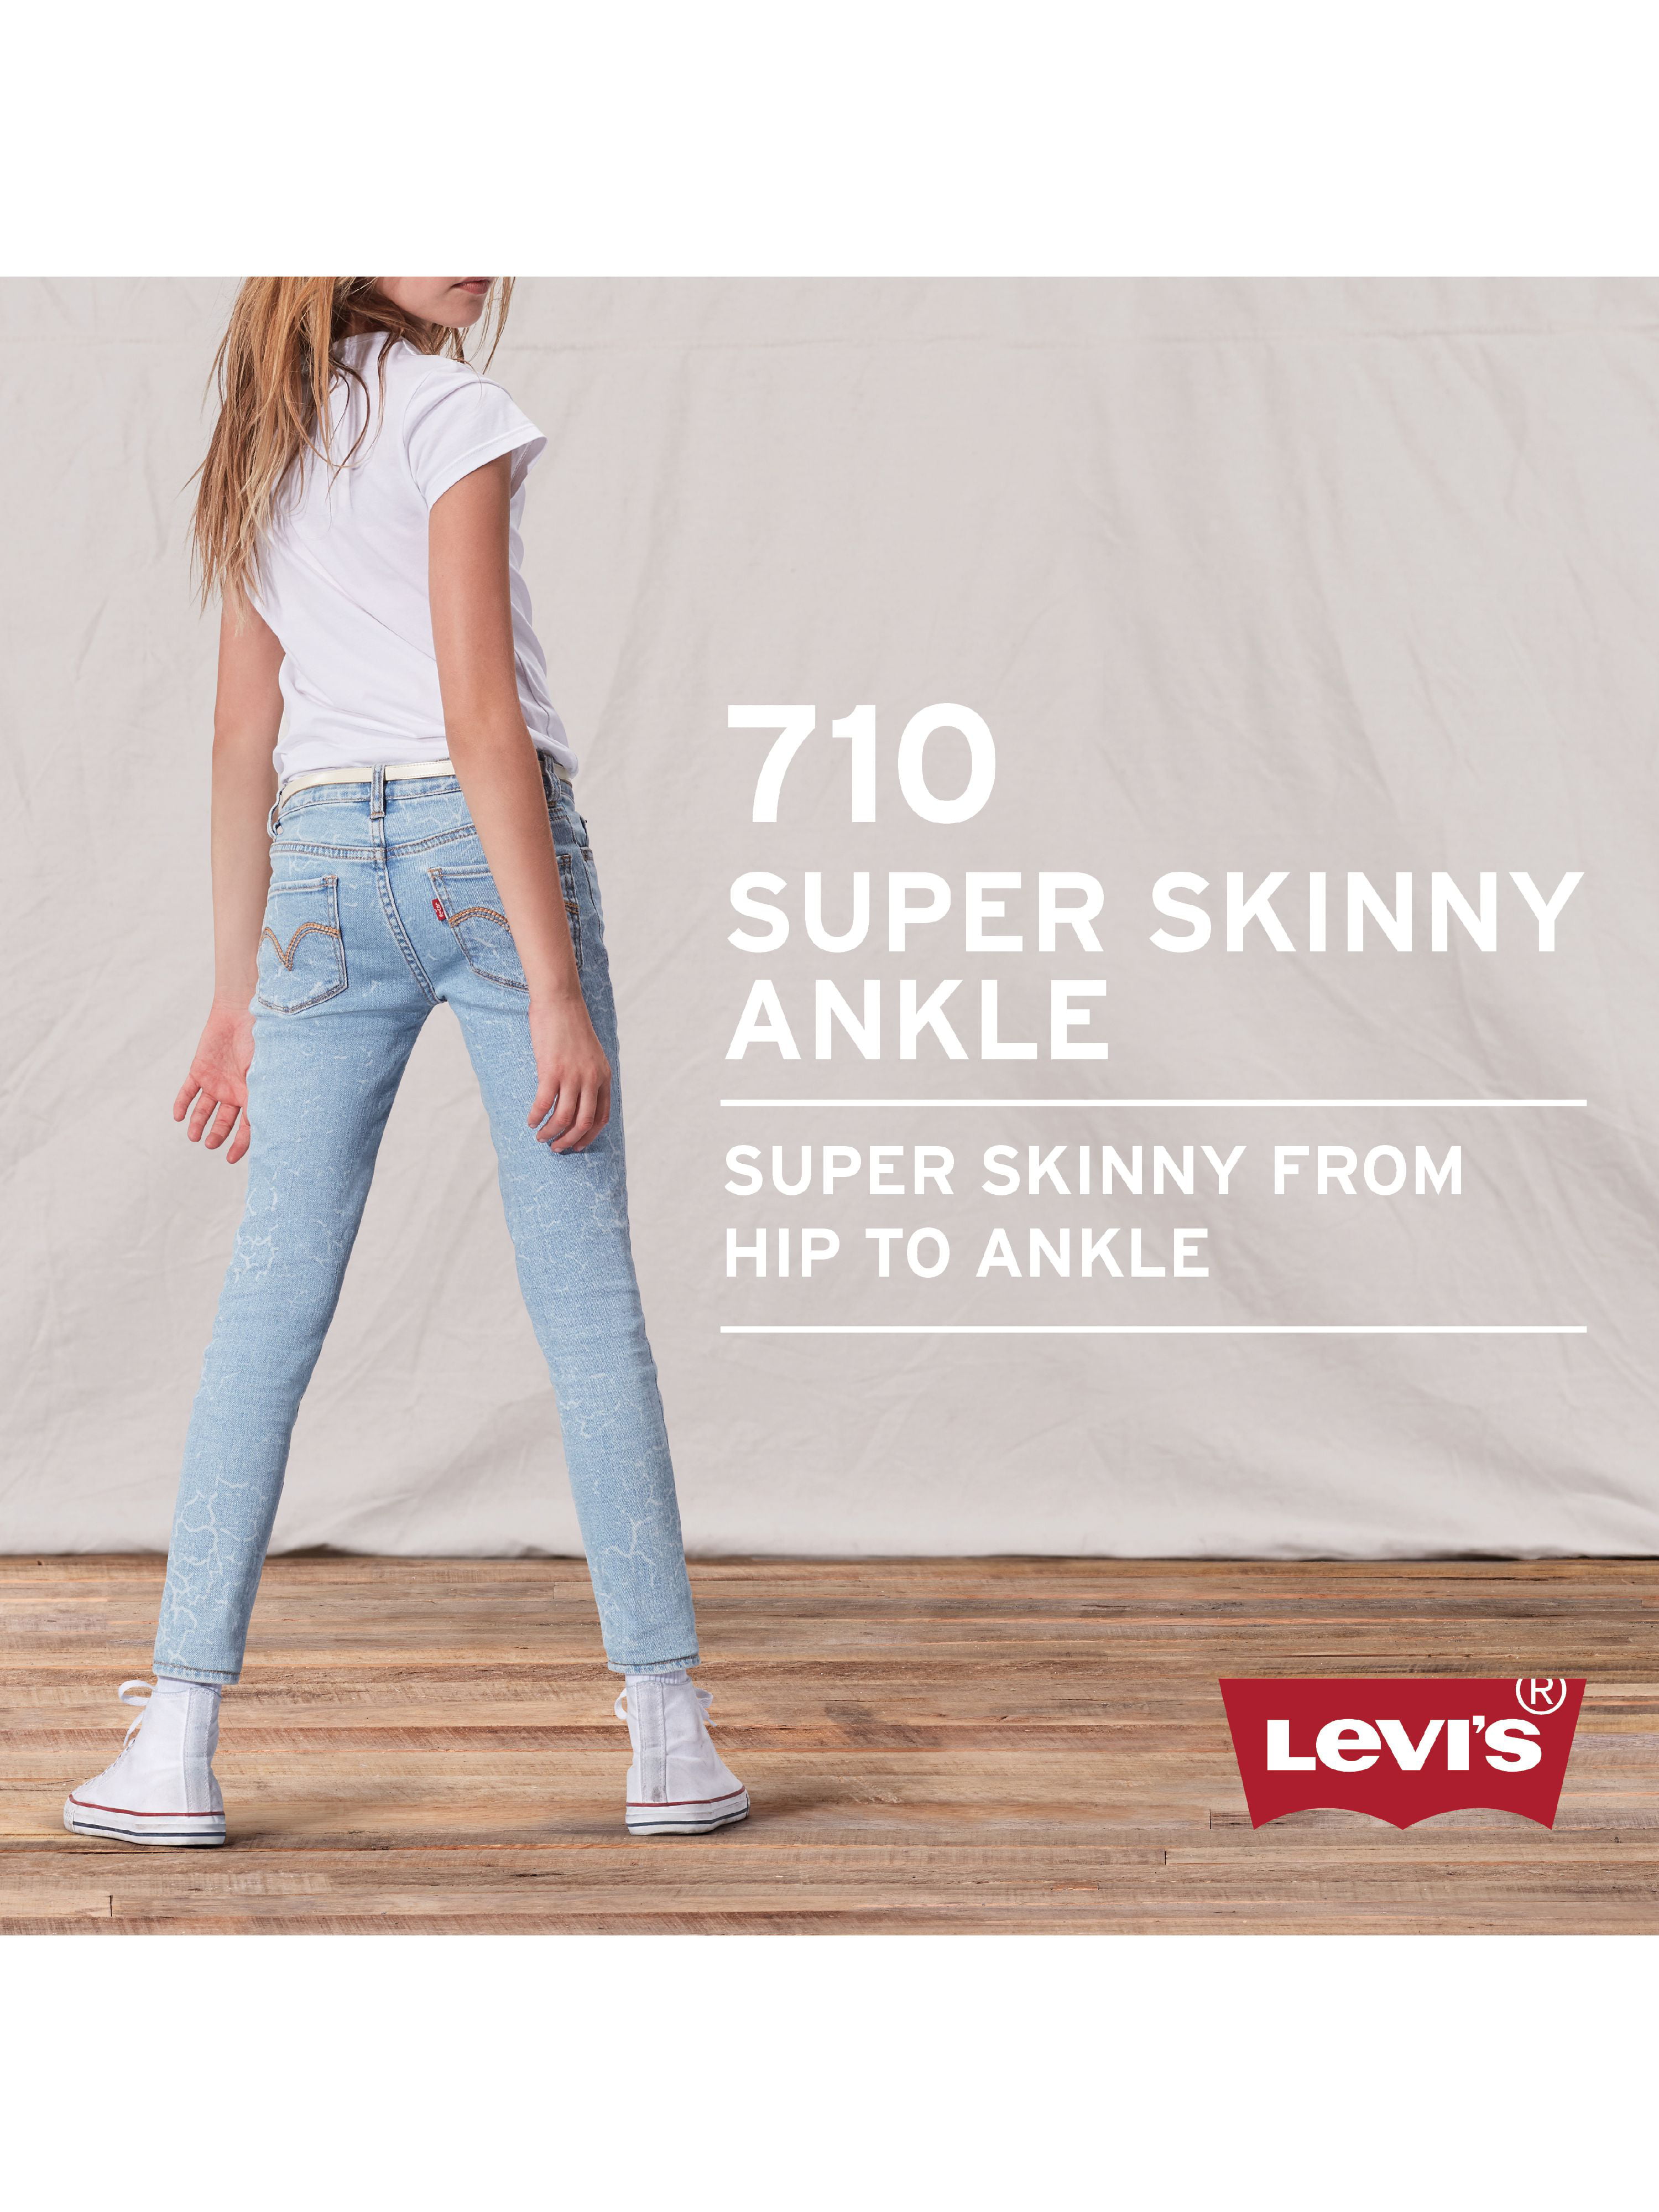 710 Ankle Super Skinny Jeans 